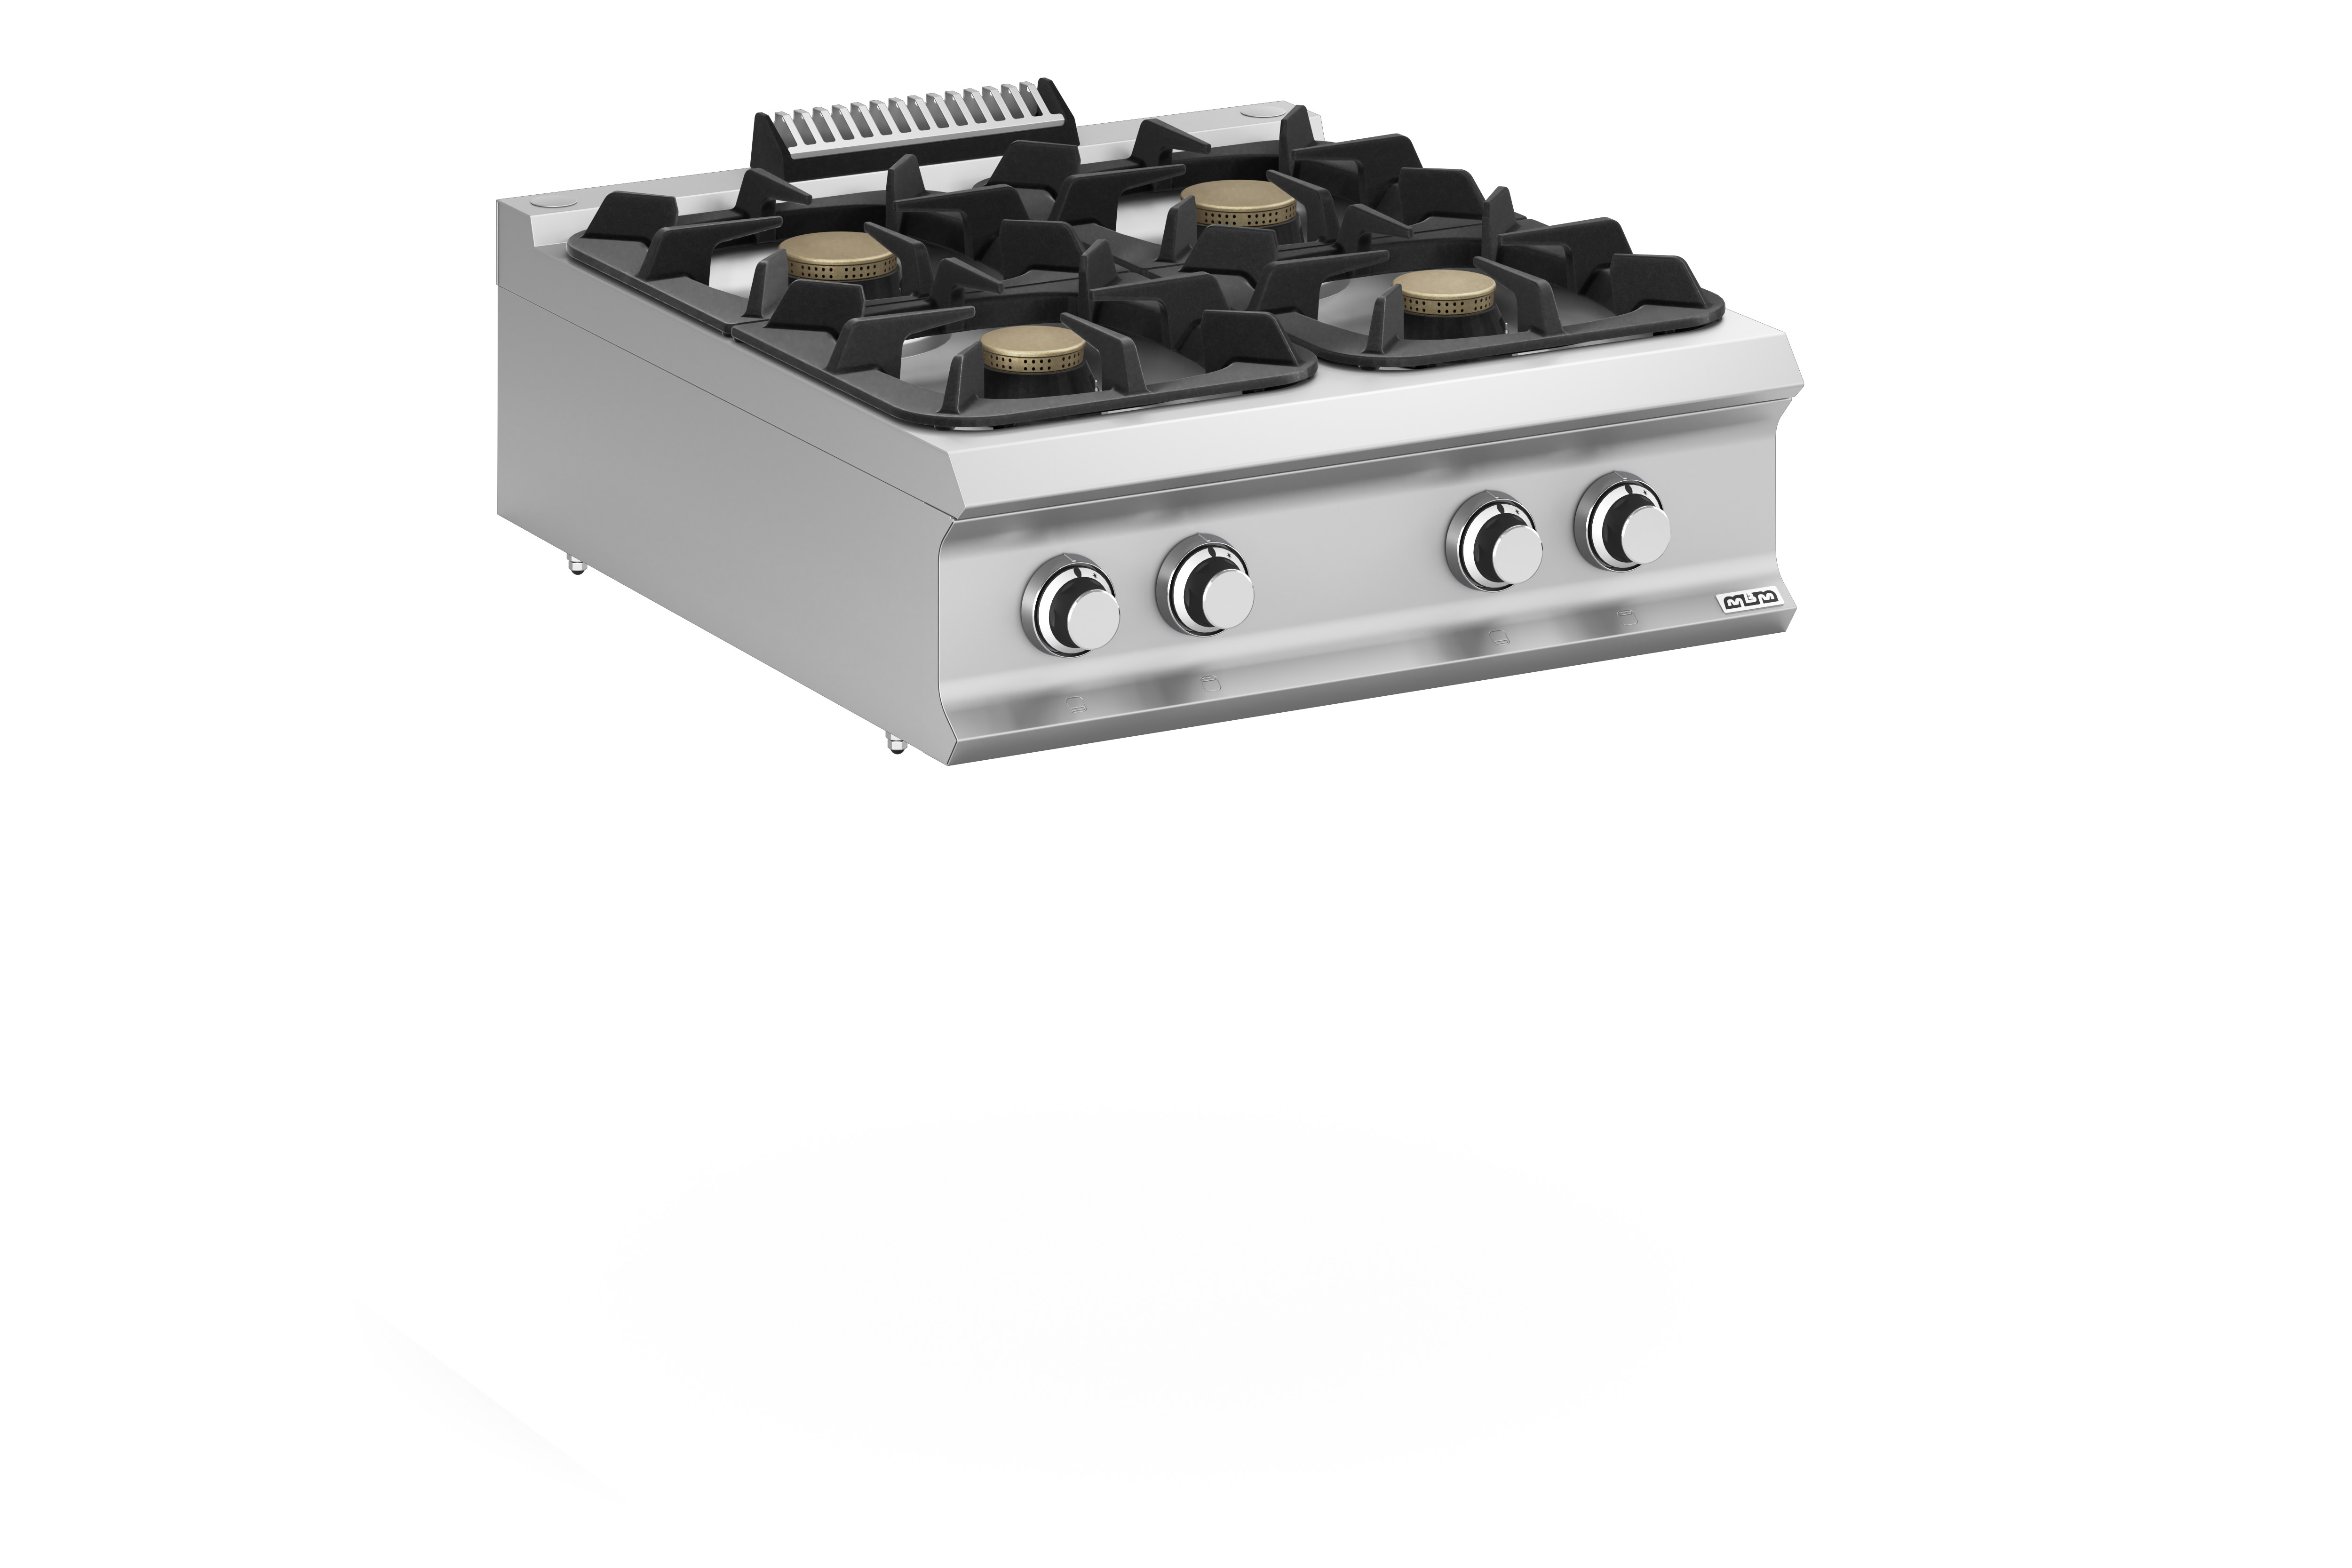 Domina Pro 900 FB98TXXL 4 Powered Burner Countertop Cooker